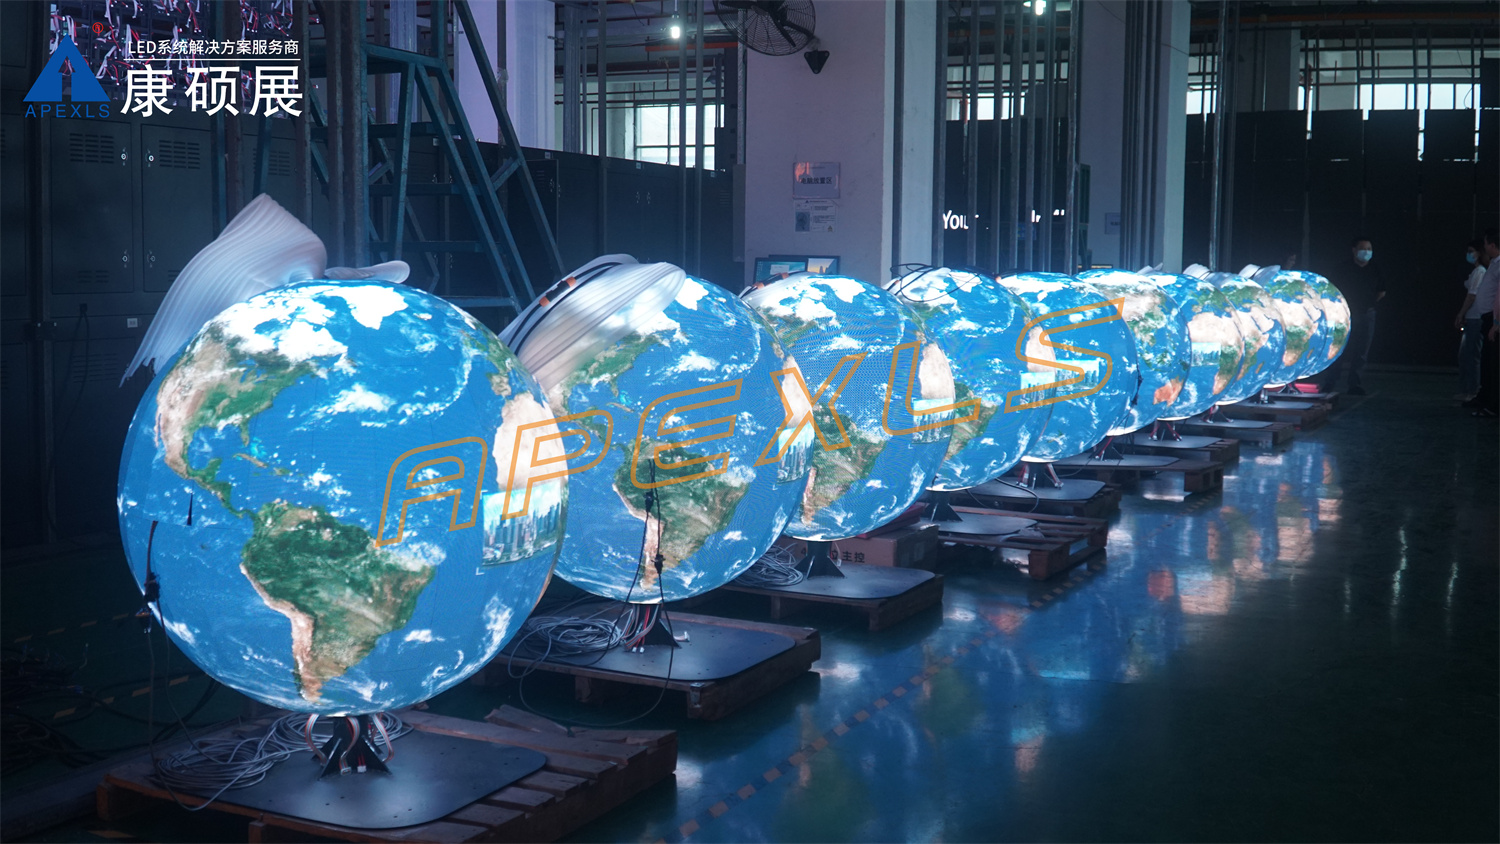 LED球形屏外贸出口